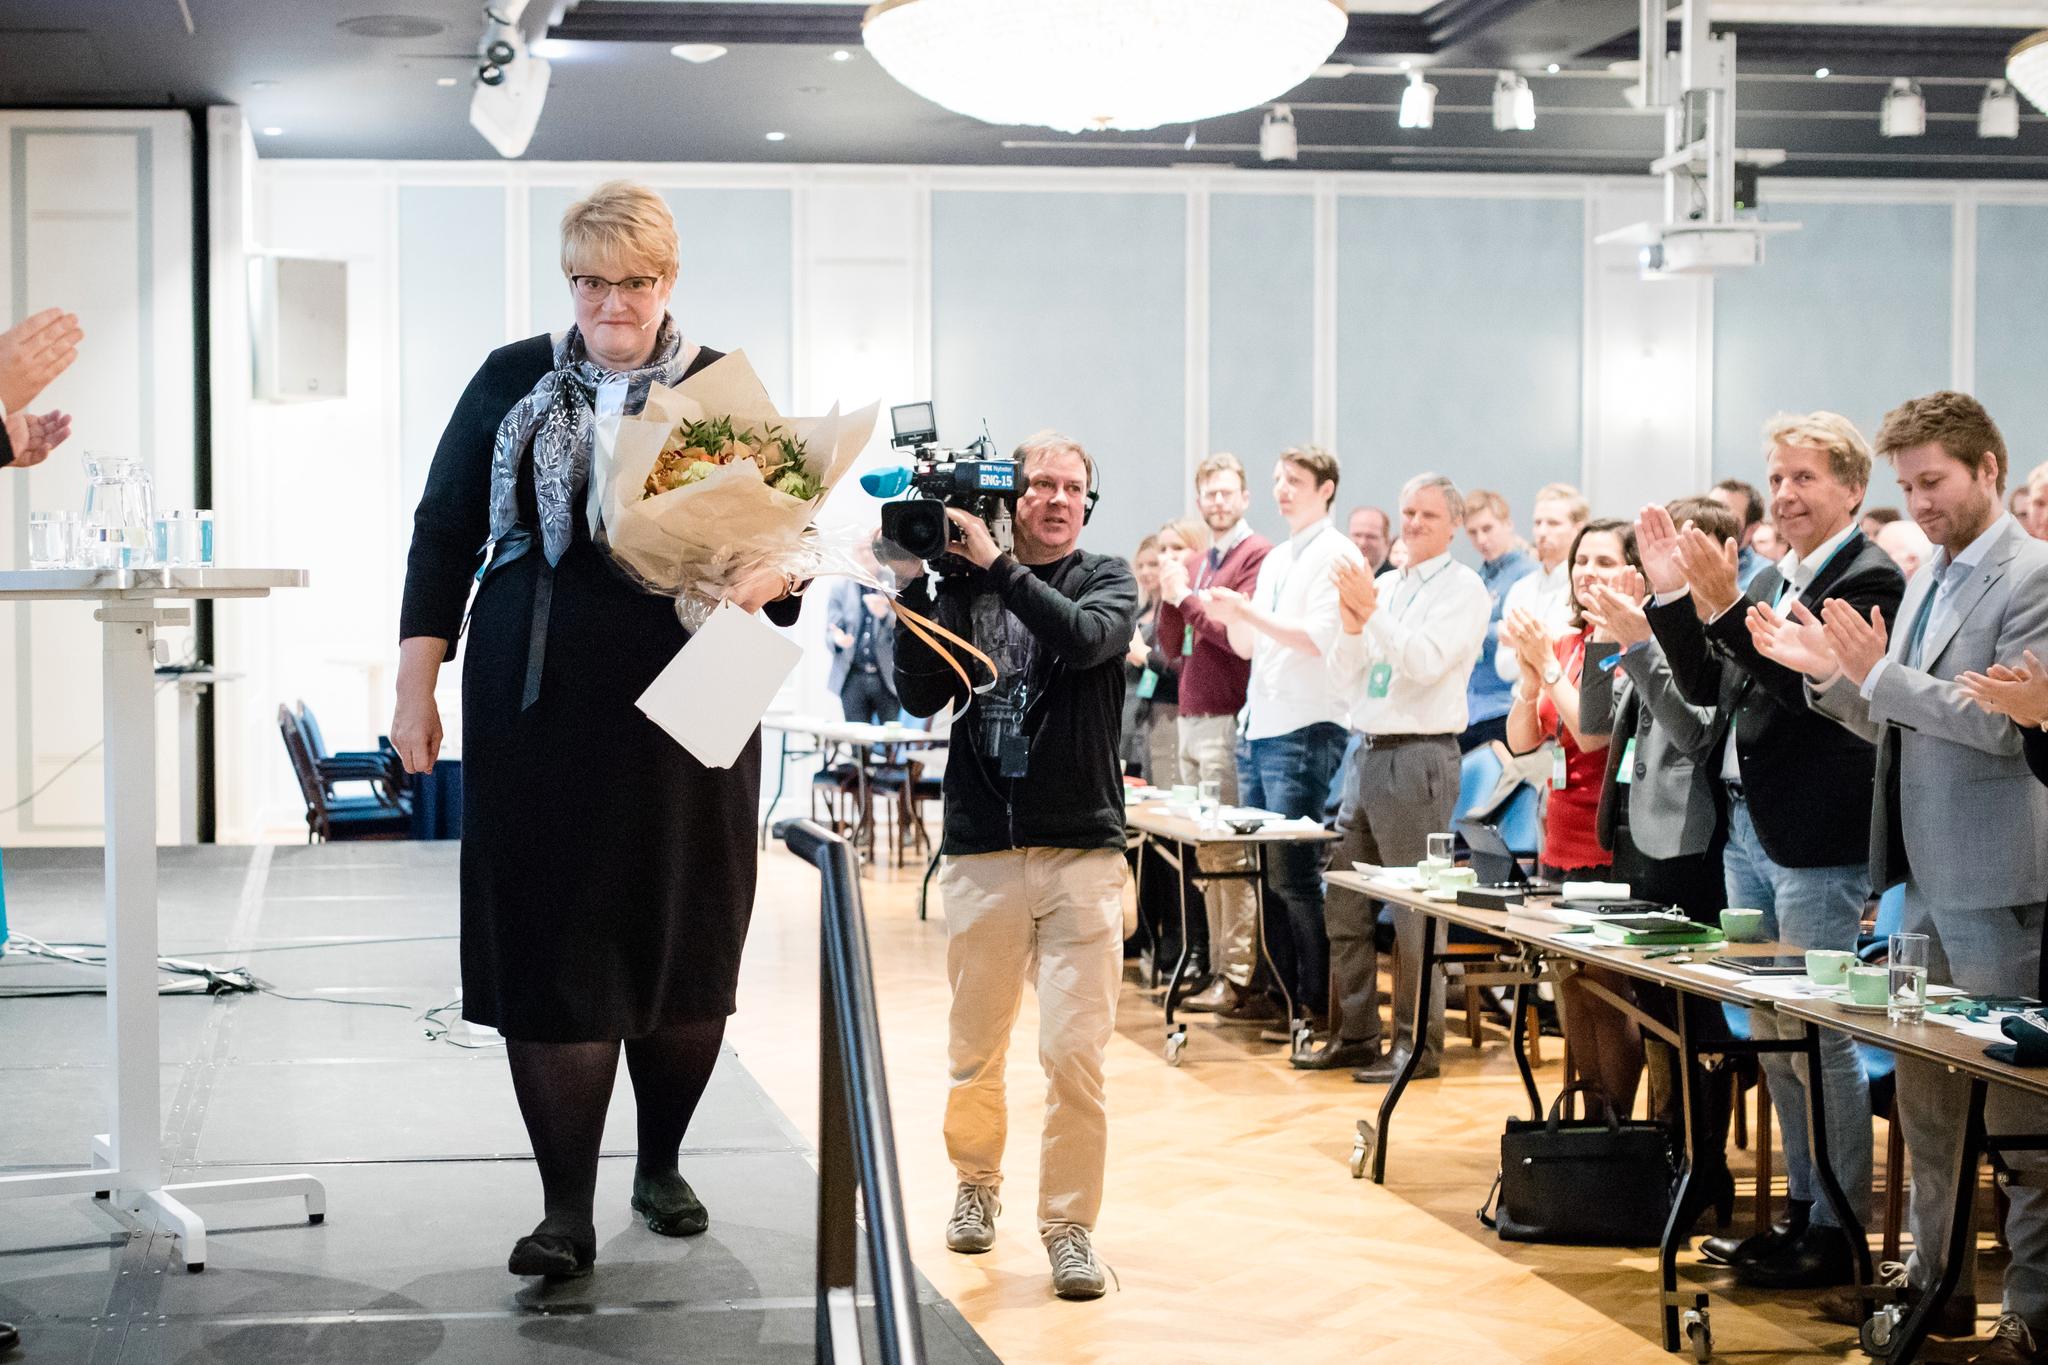  Partileder Trine Skei Grande fikk en varm mottagelse lørdag på Venstres landskonferanse. 